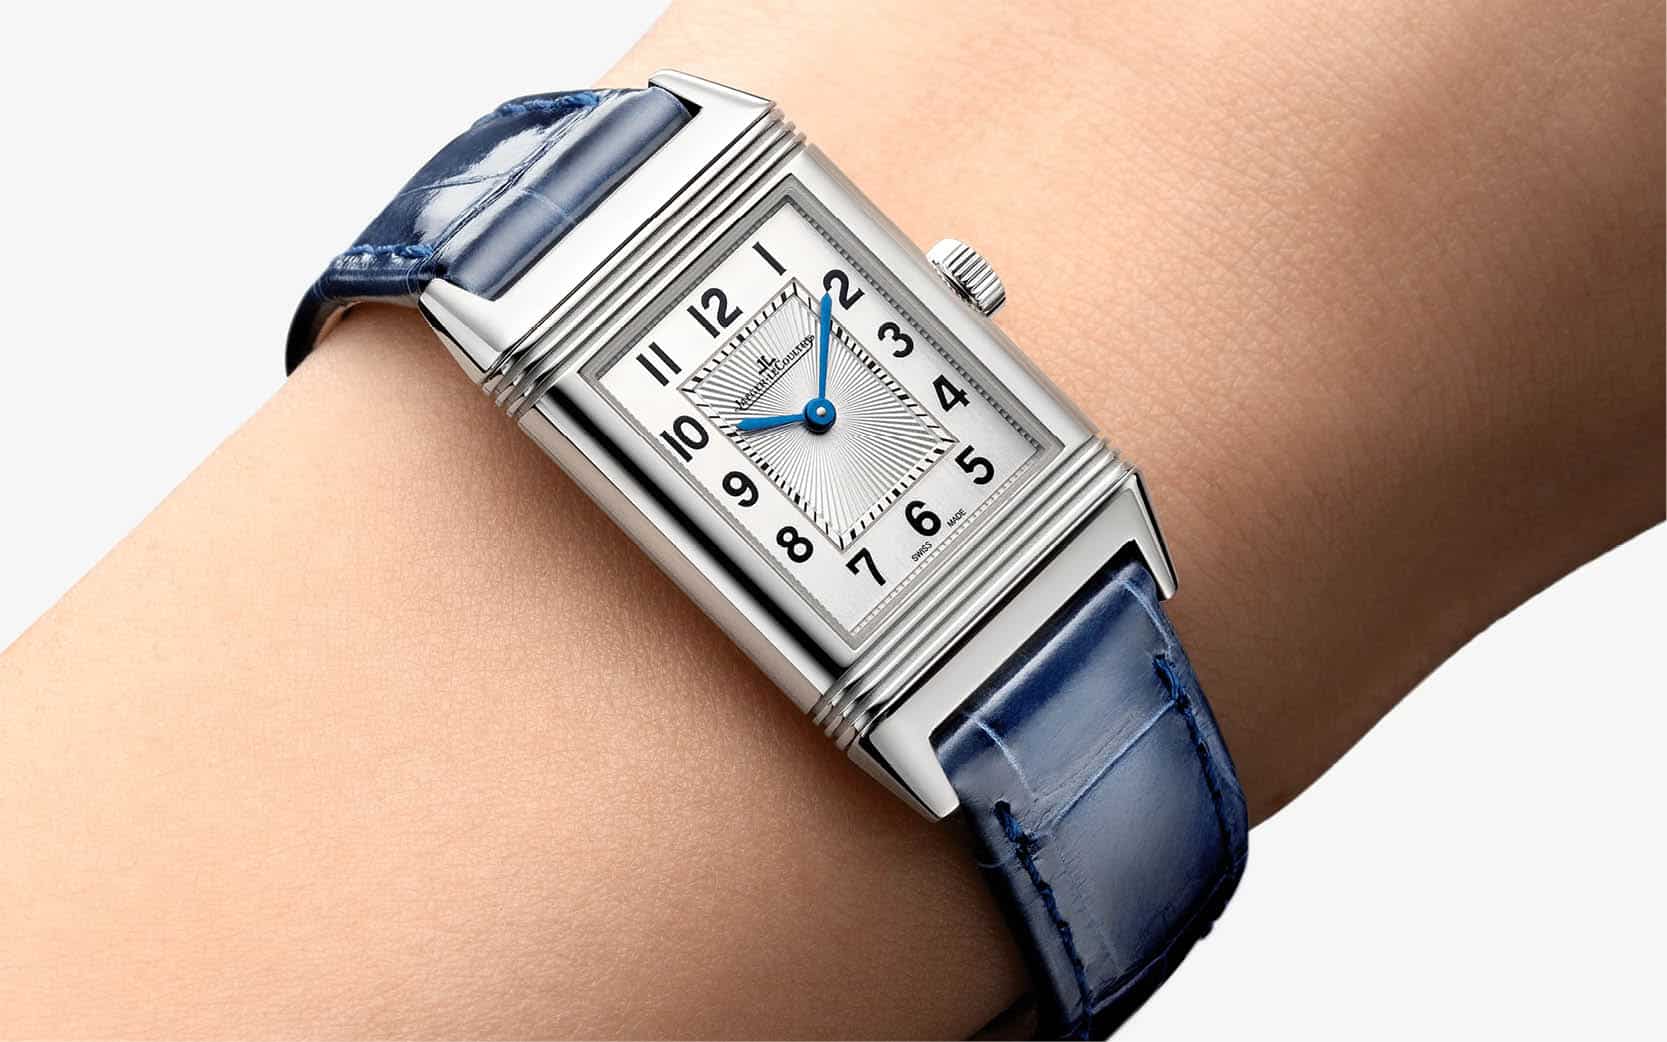 Jaeger-LeCoultre Reverso blue watch